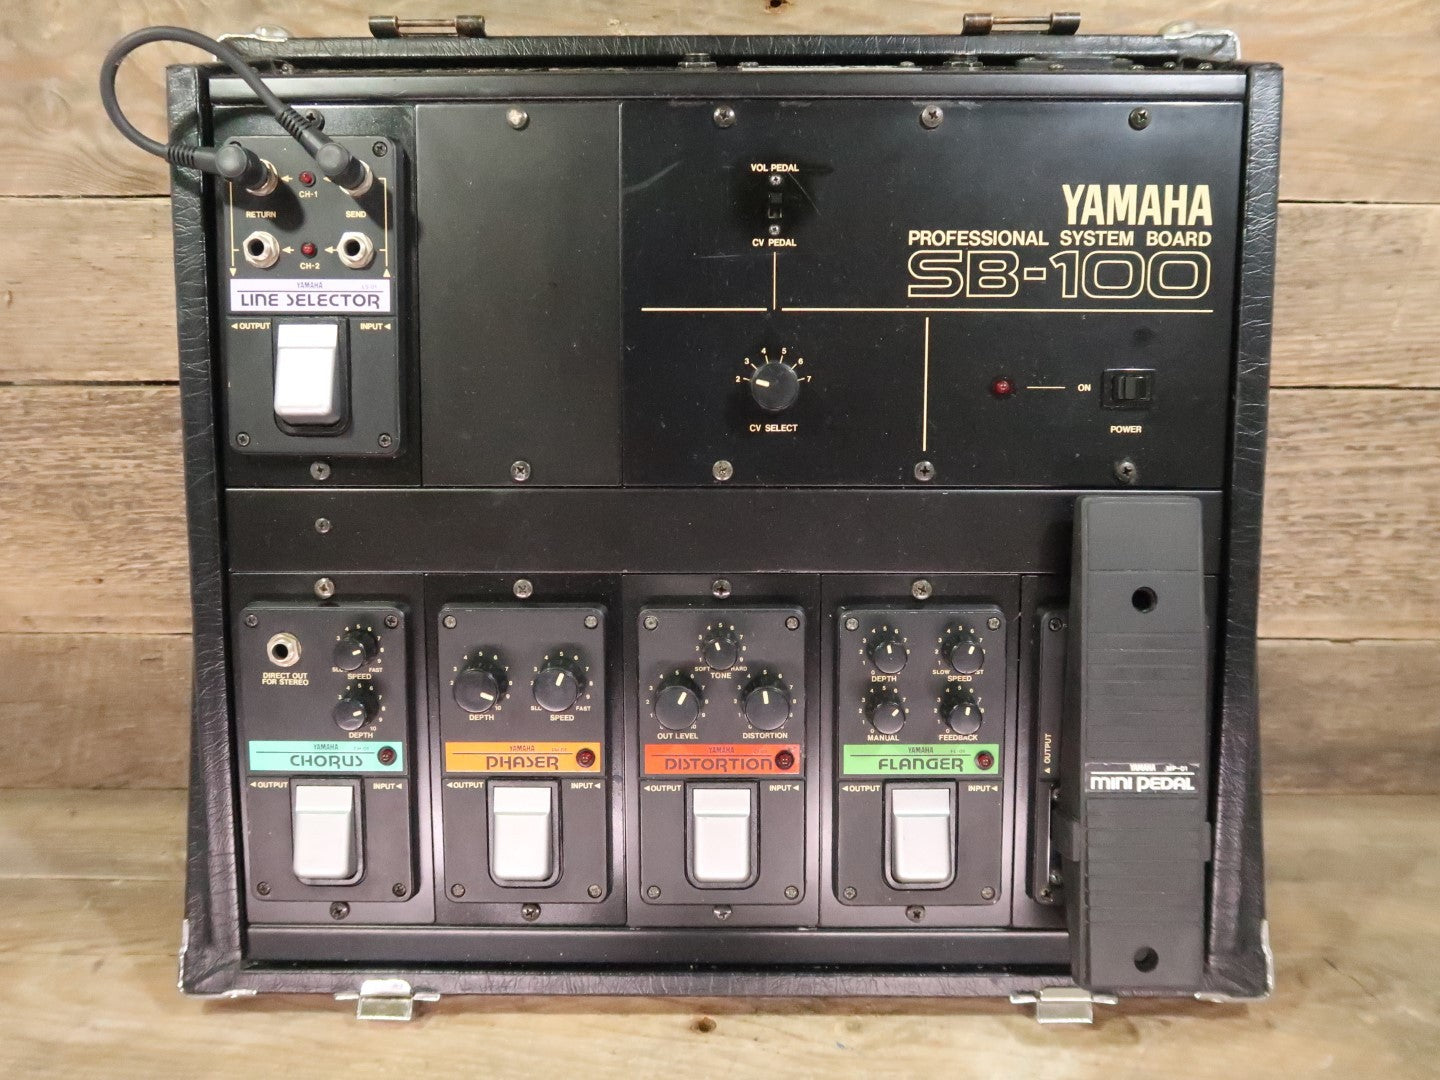 Yamaha SB-100 Professional System Board met pedalen (CH-01 Chorus, PH-01 Phaser, DI-01 Distortion, FL-01 Flanger, LS-01, MP-01)